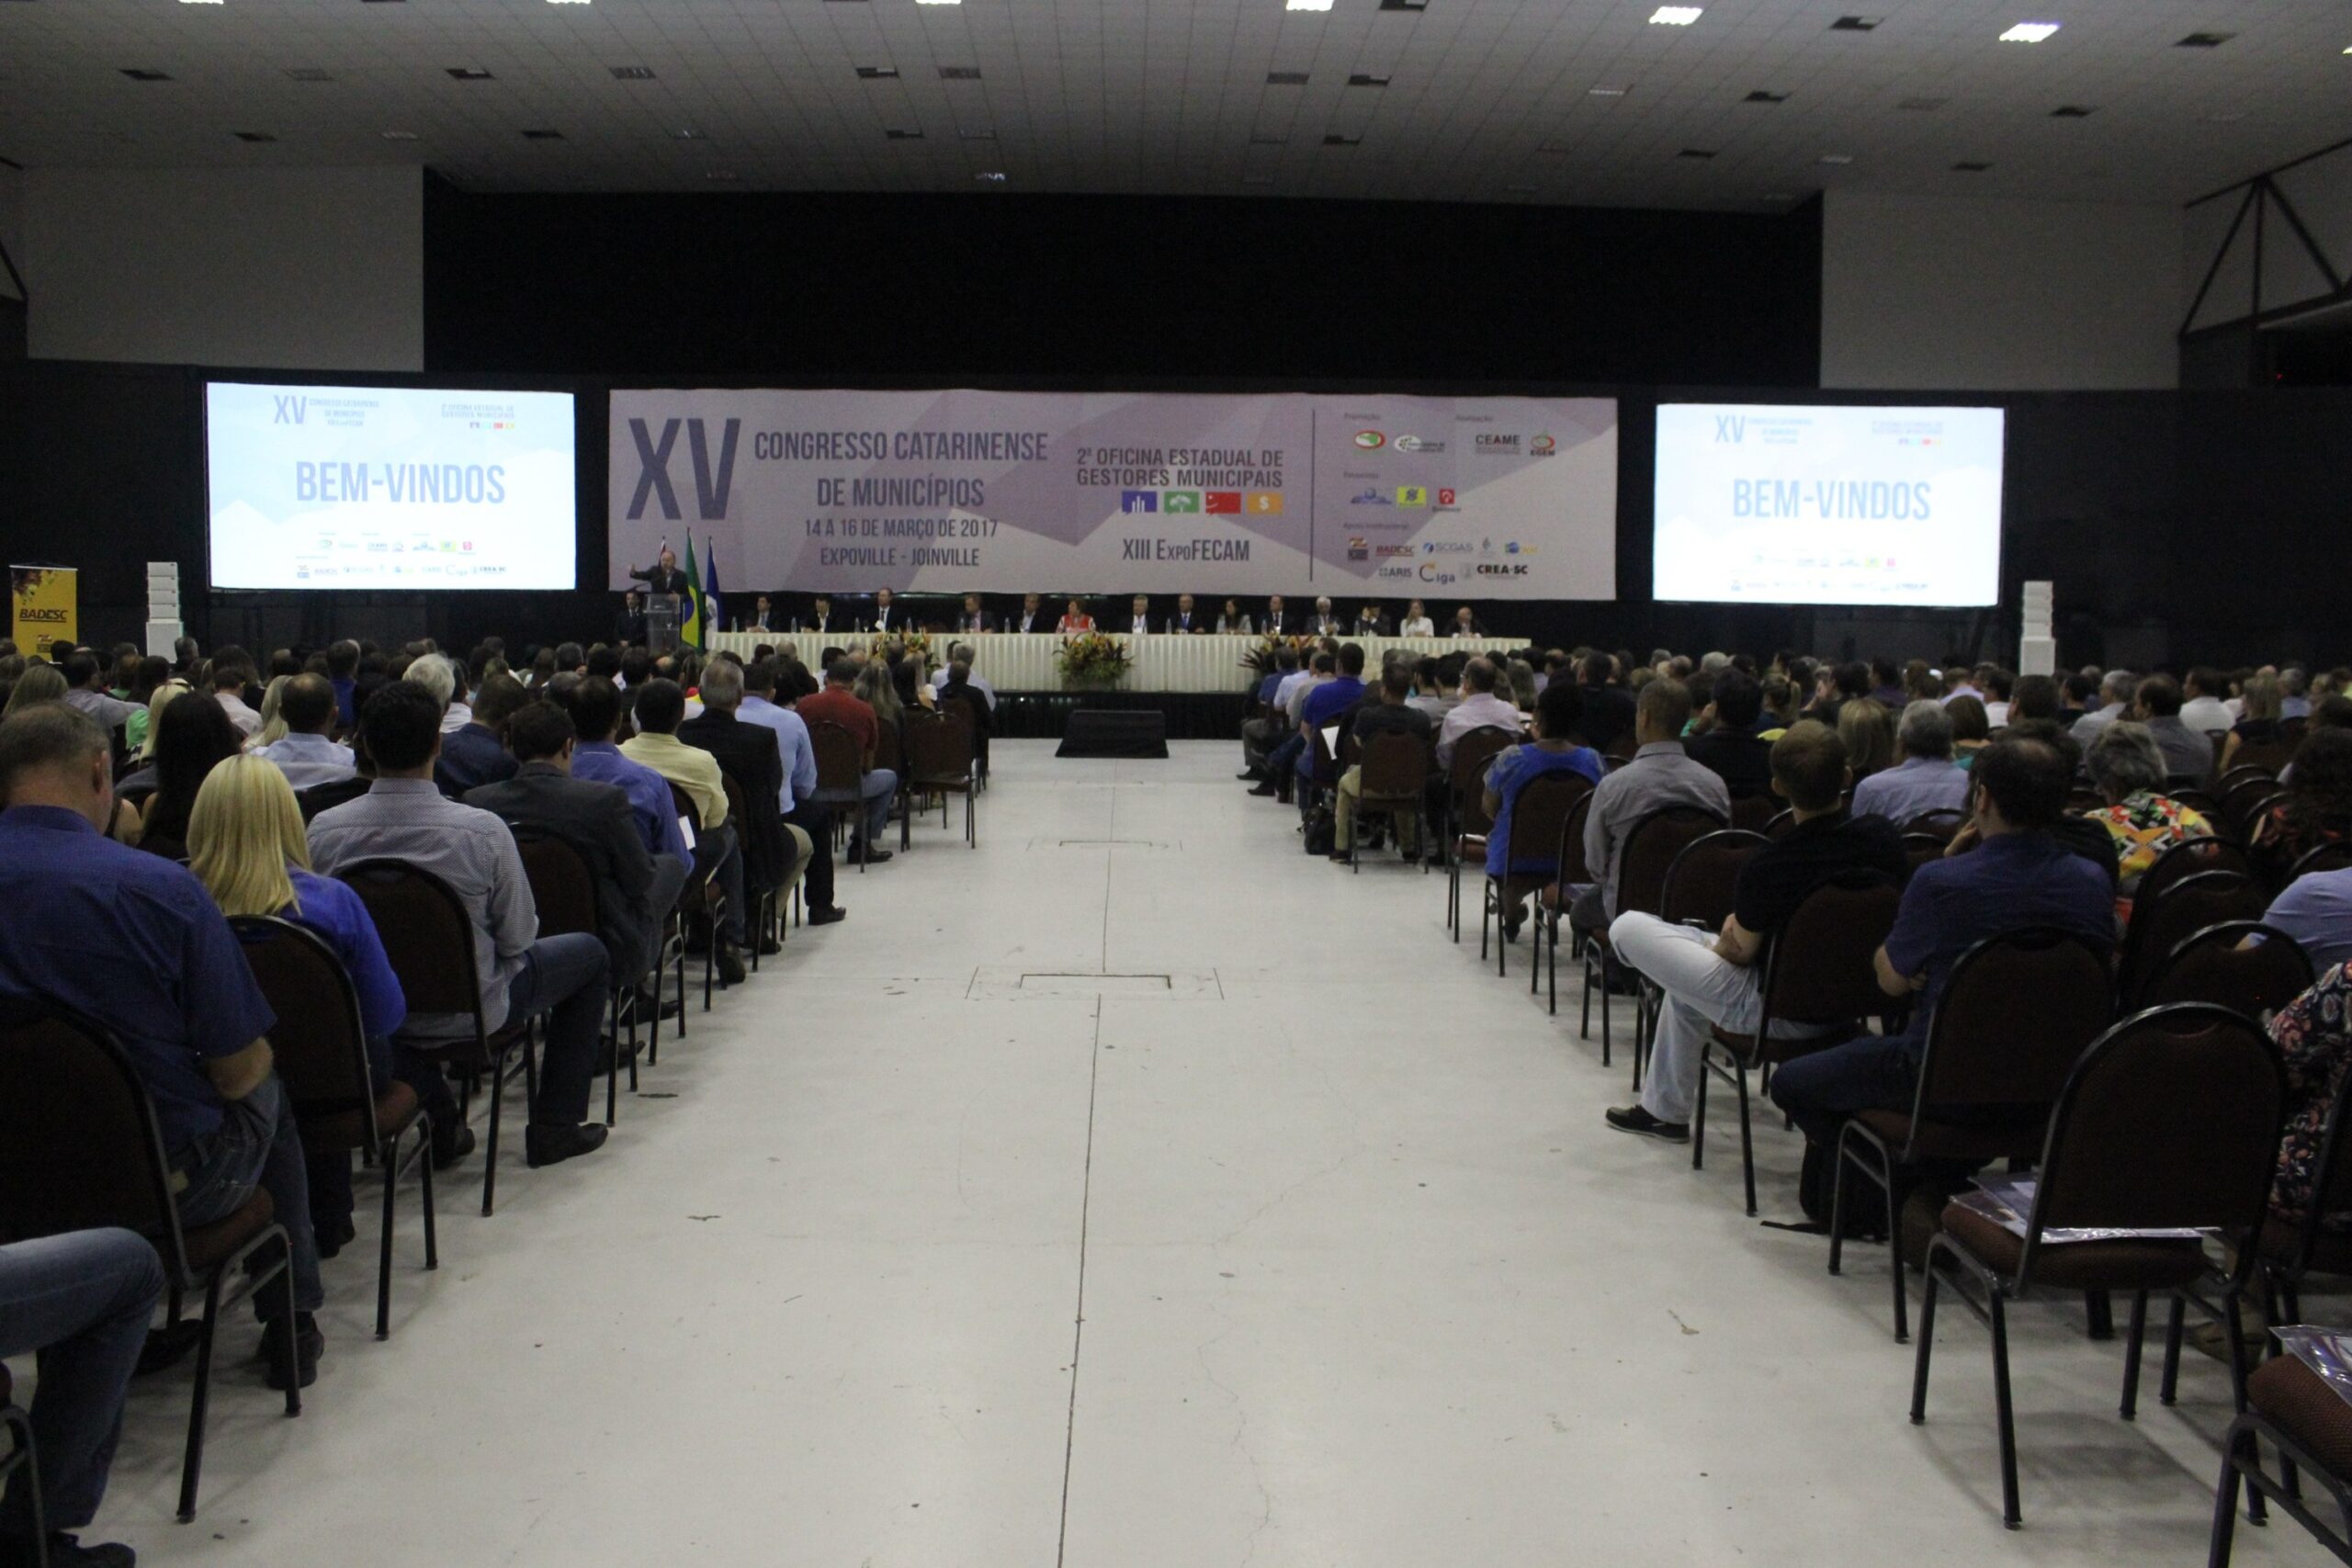 You are currently viewing A importância da união dos prefeitos é destacada durante a abertura do XV Congresso Catarinense de Municípios